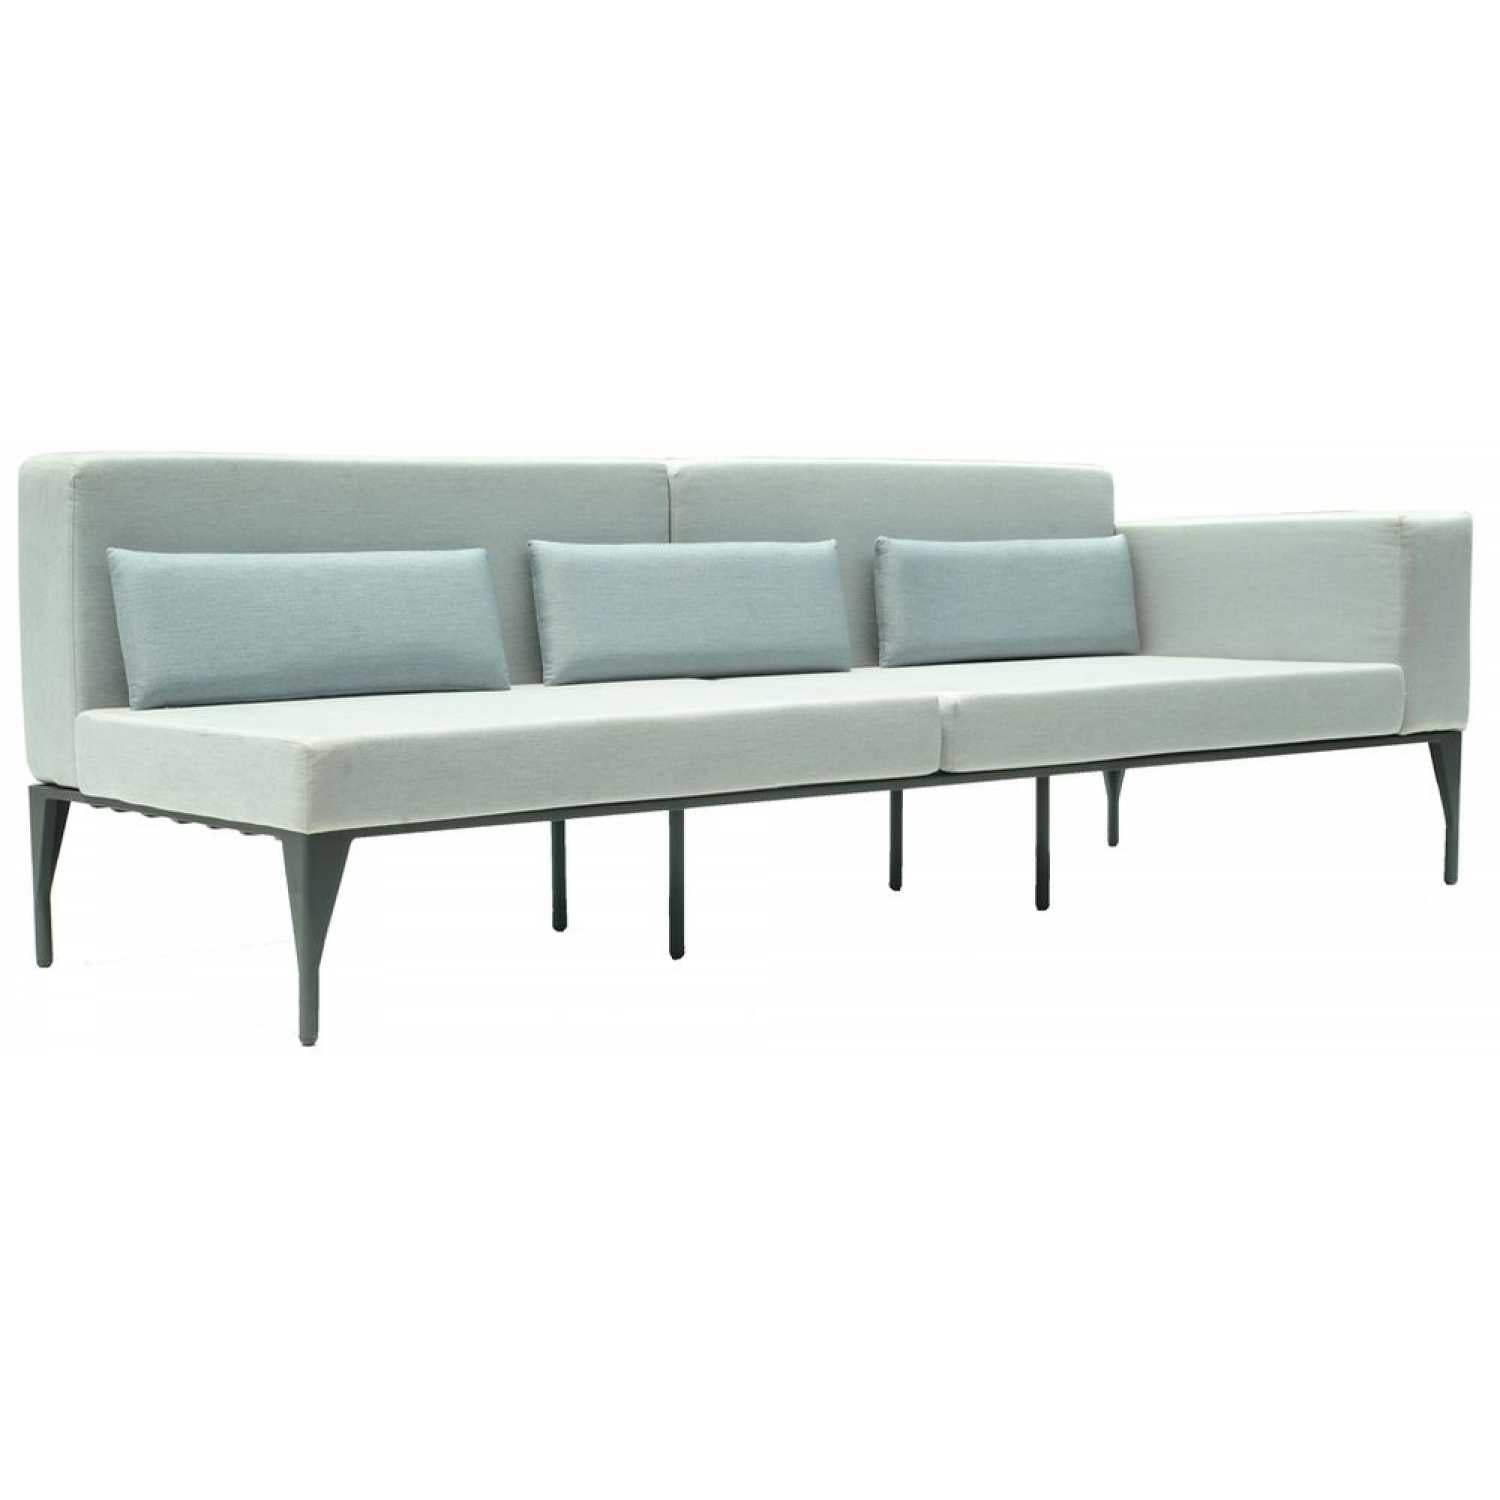 Brenham Left Sofa - PadioLiving - Brenham Left Sofa - Outdoor Sofa - Panama Artic(£3017) - PadioLiving